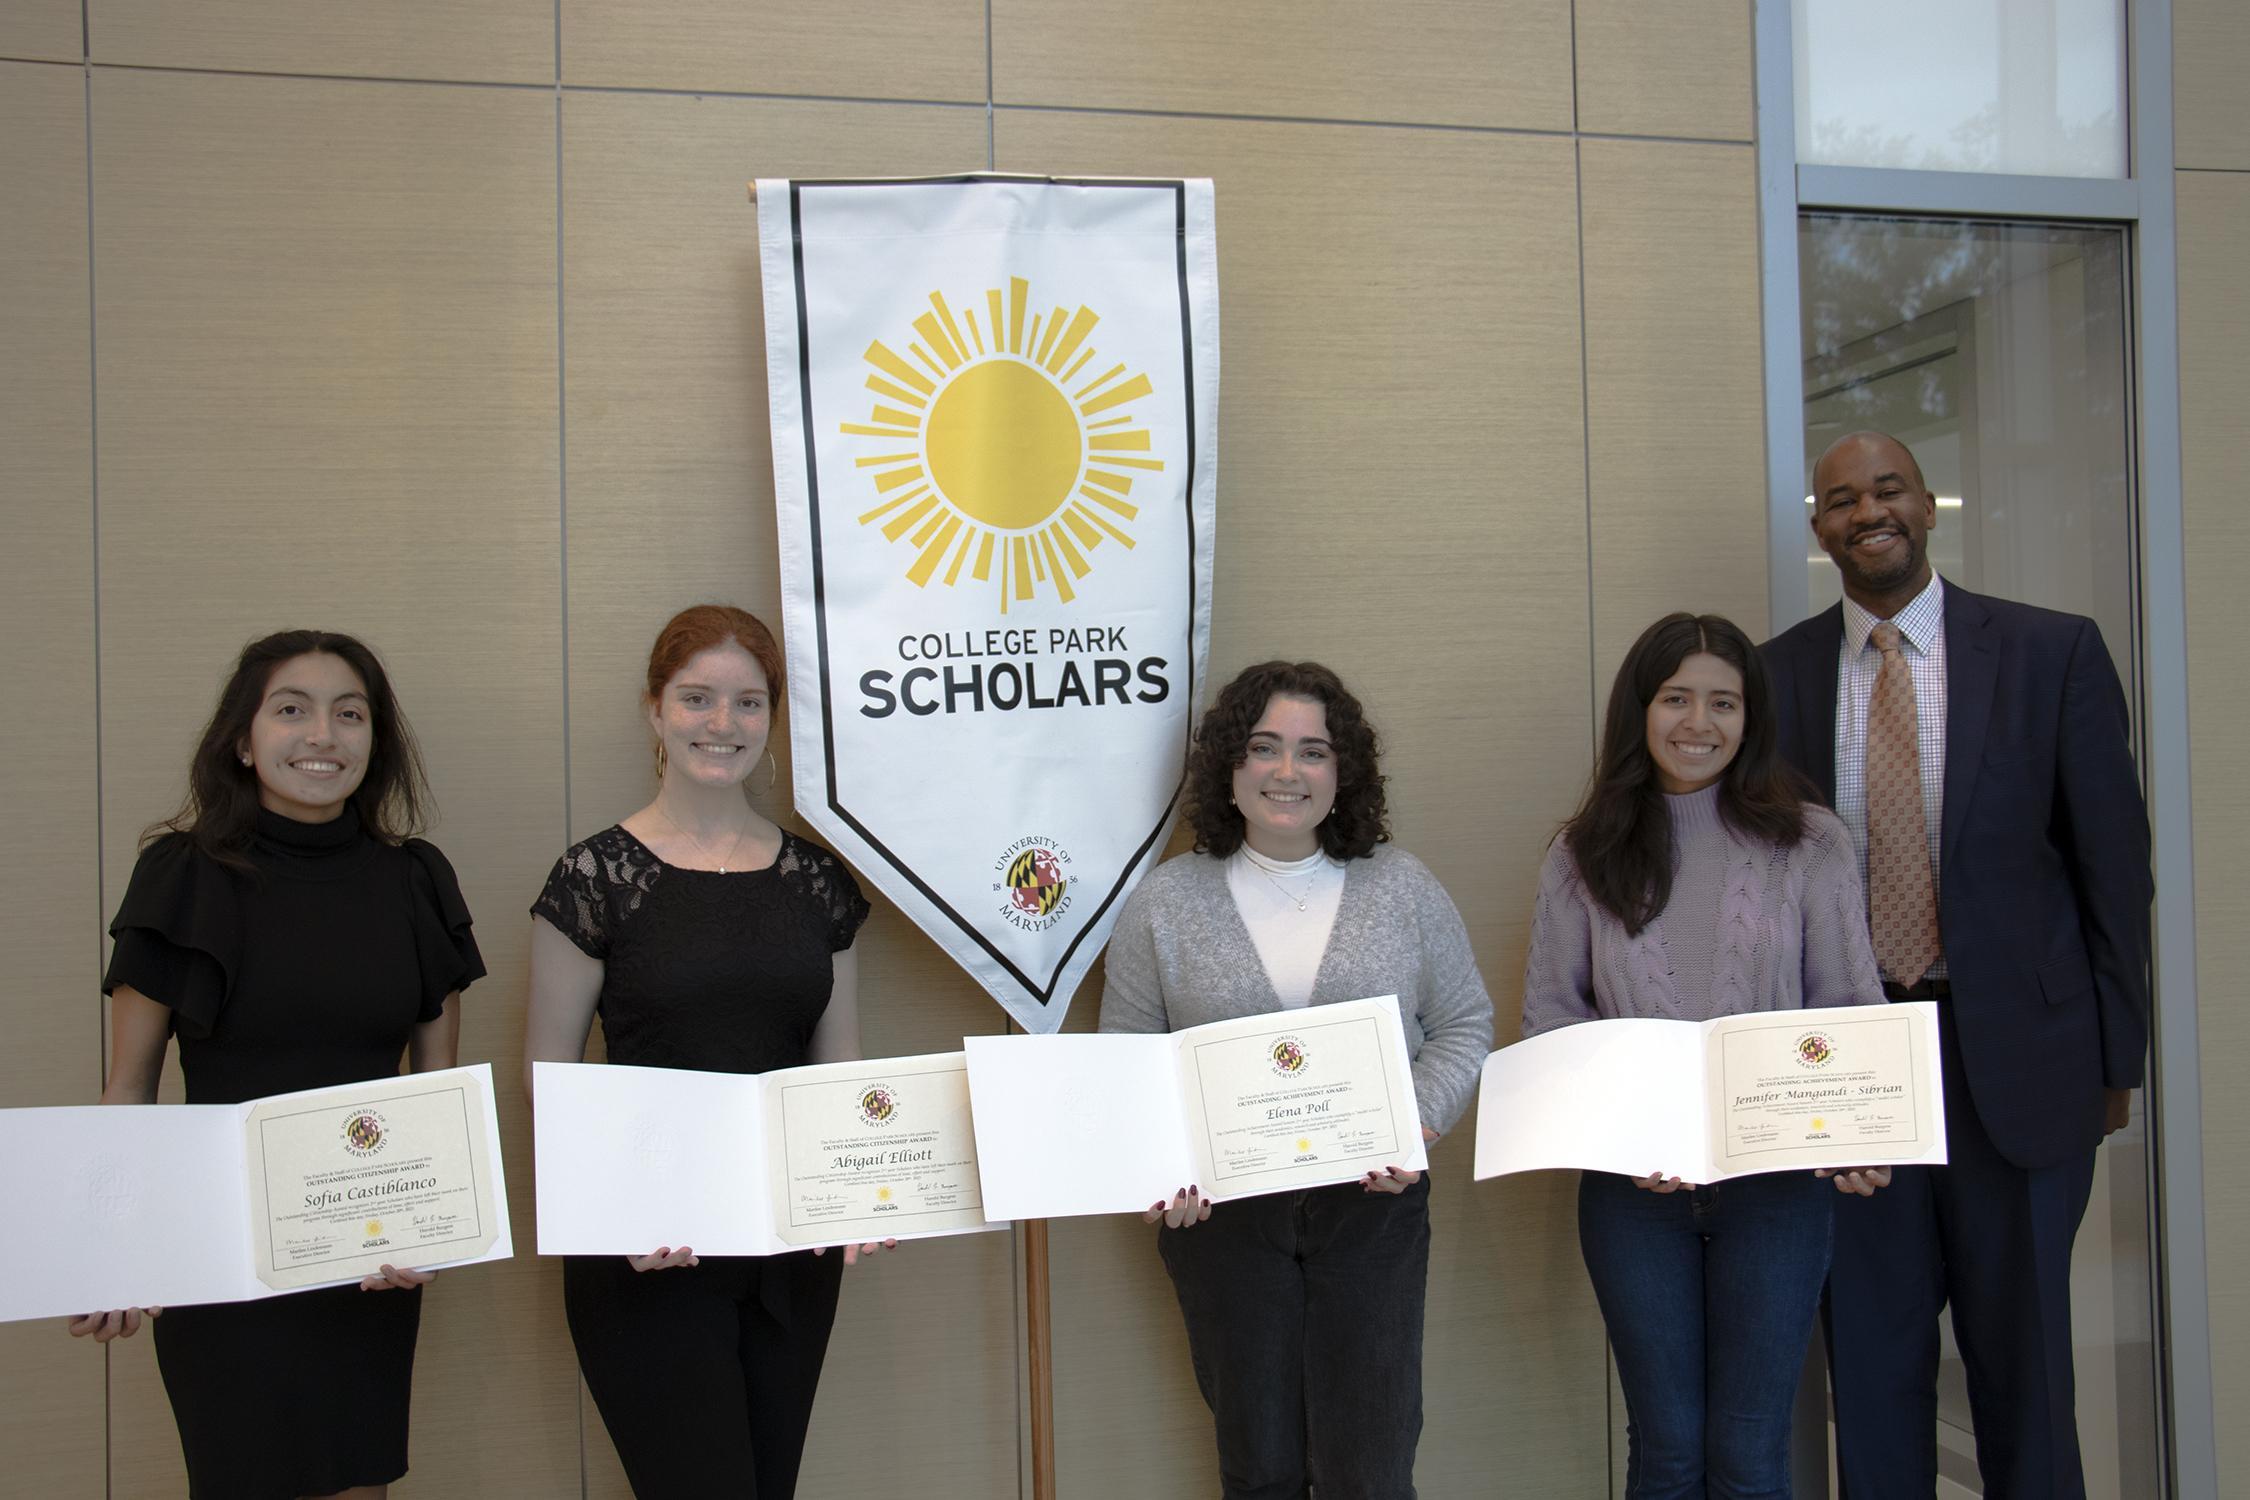 Arts program winners with certificates 